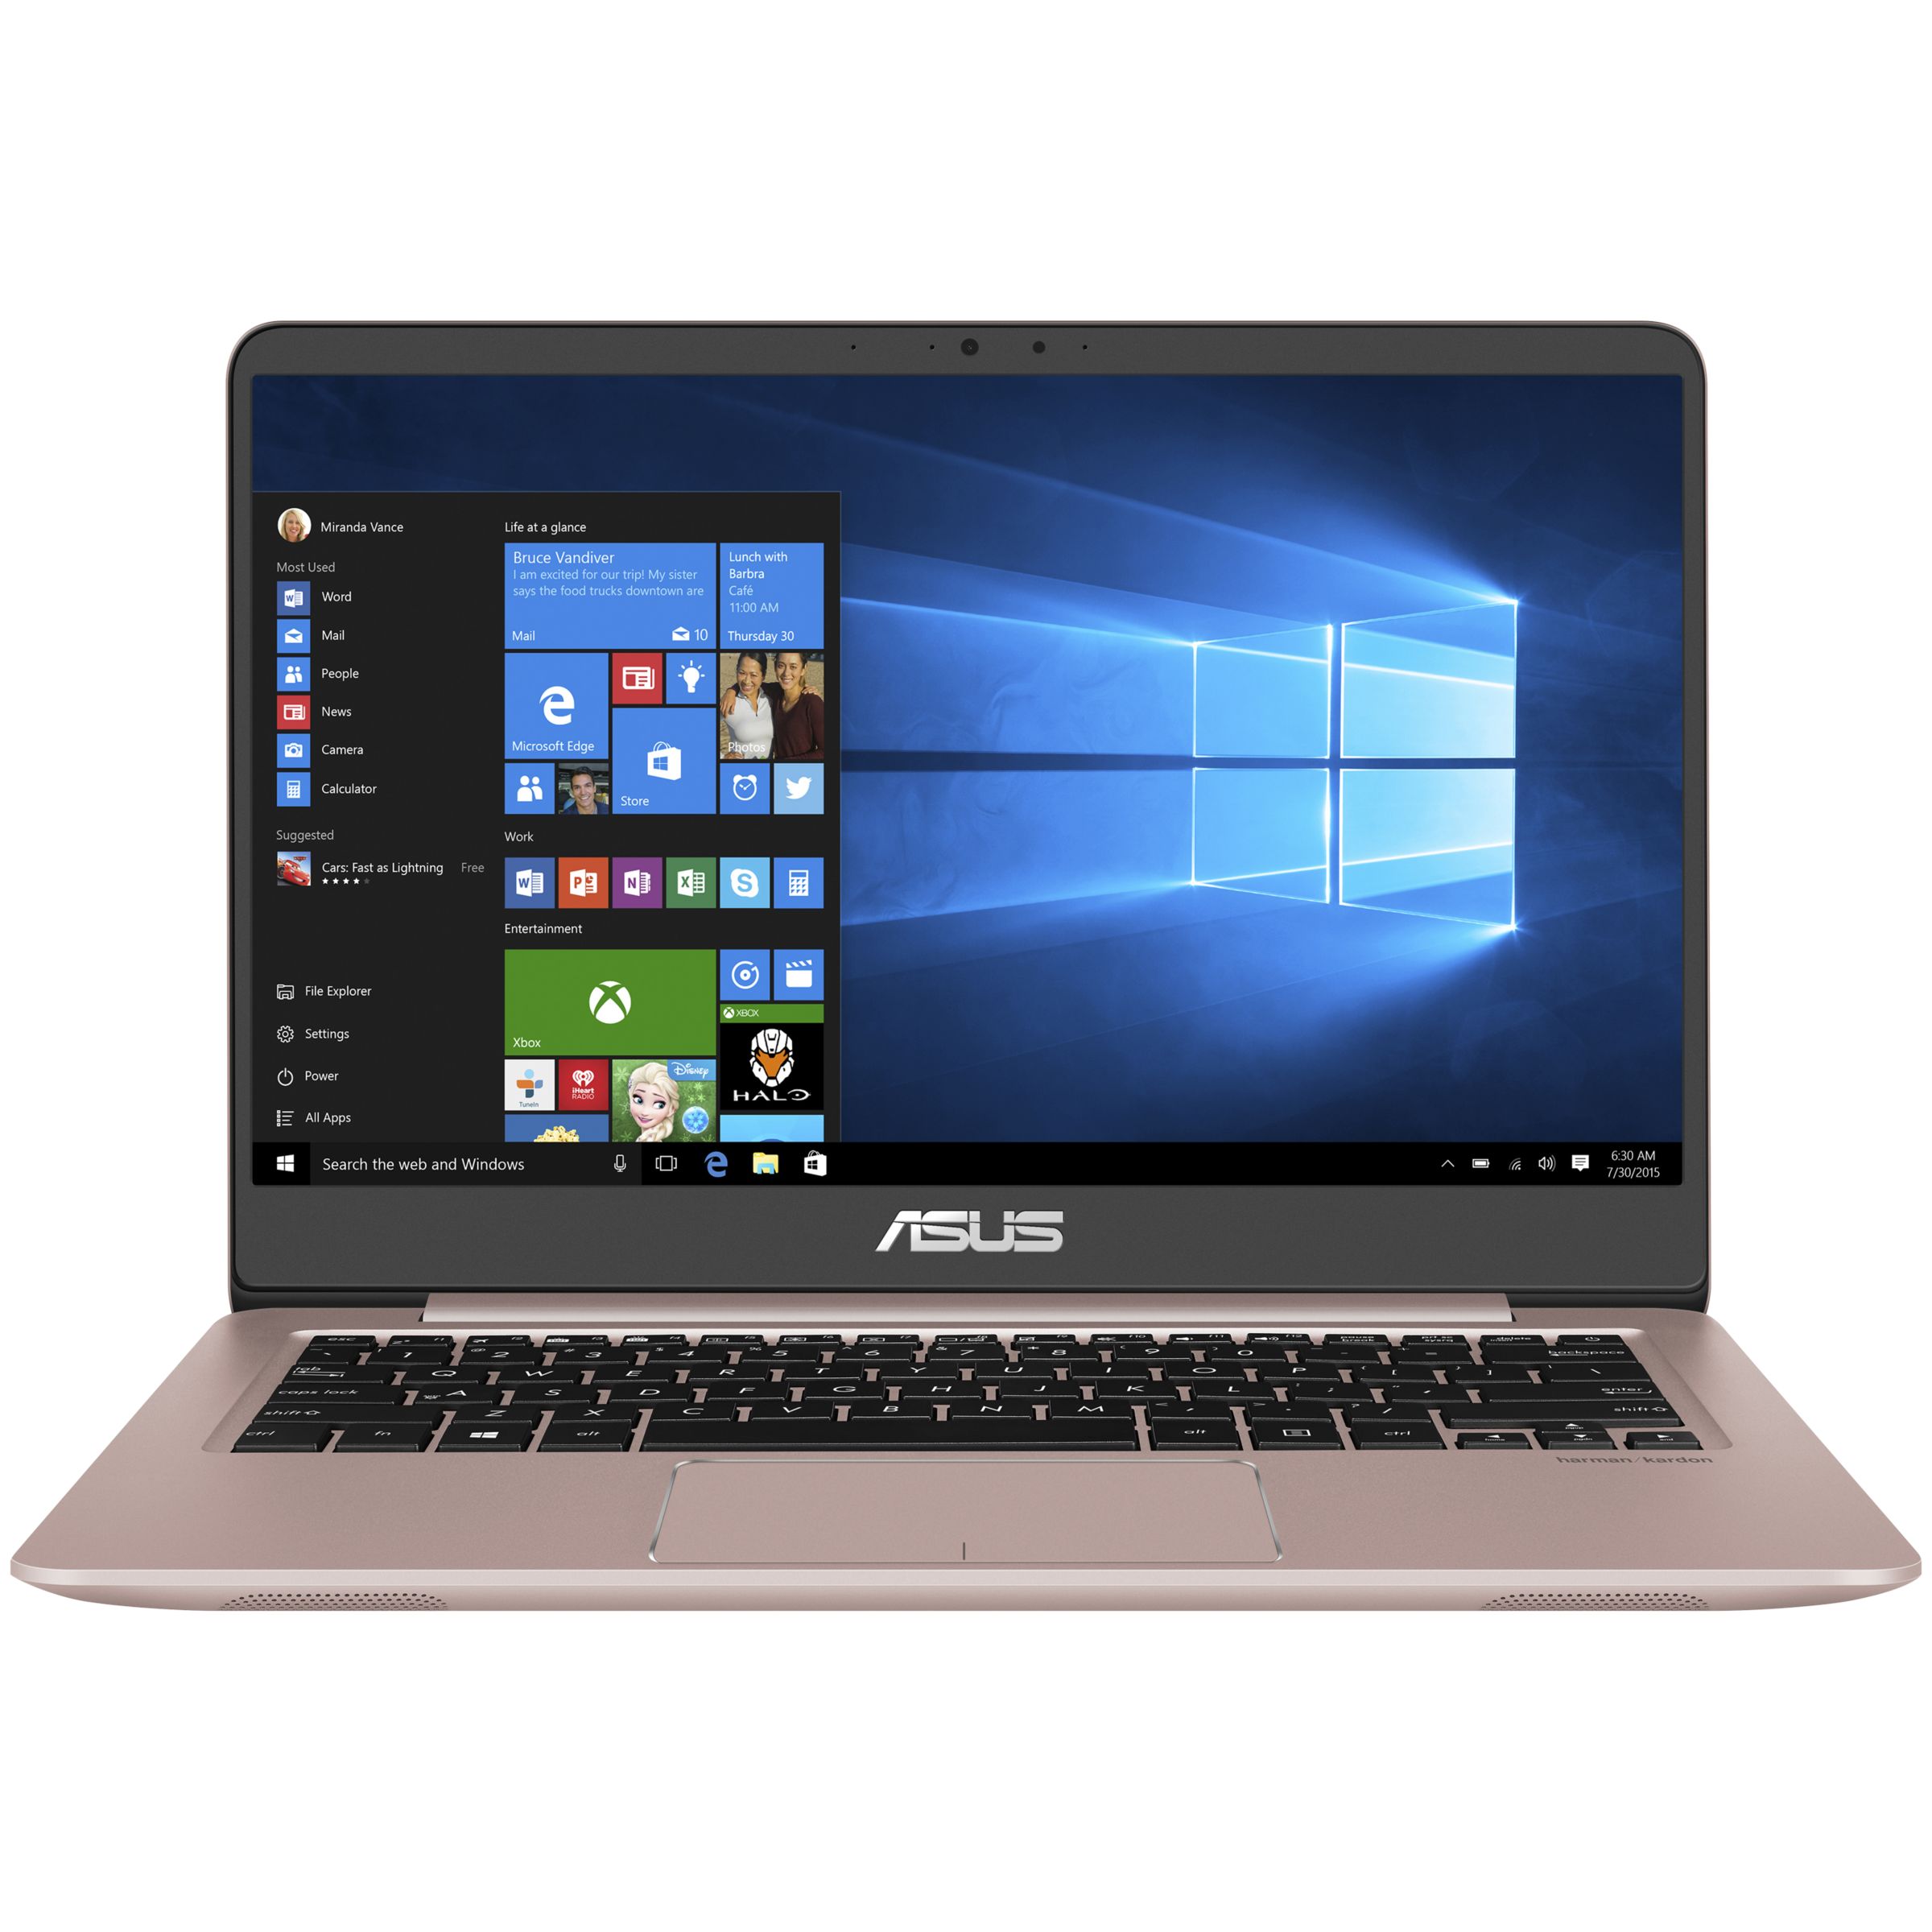 ASUS ZenBook UX410 Laptop, Intel Core i3, 4GB RAM, 128GB SSD, 14"